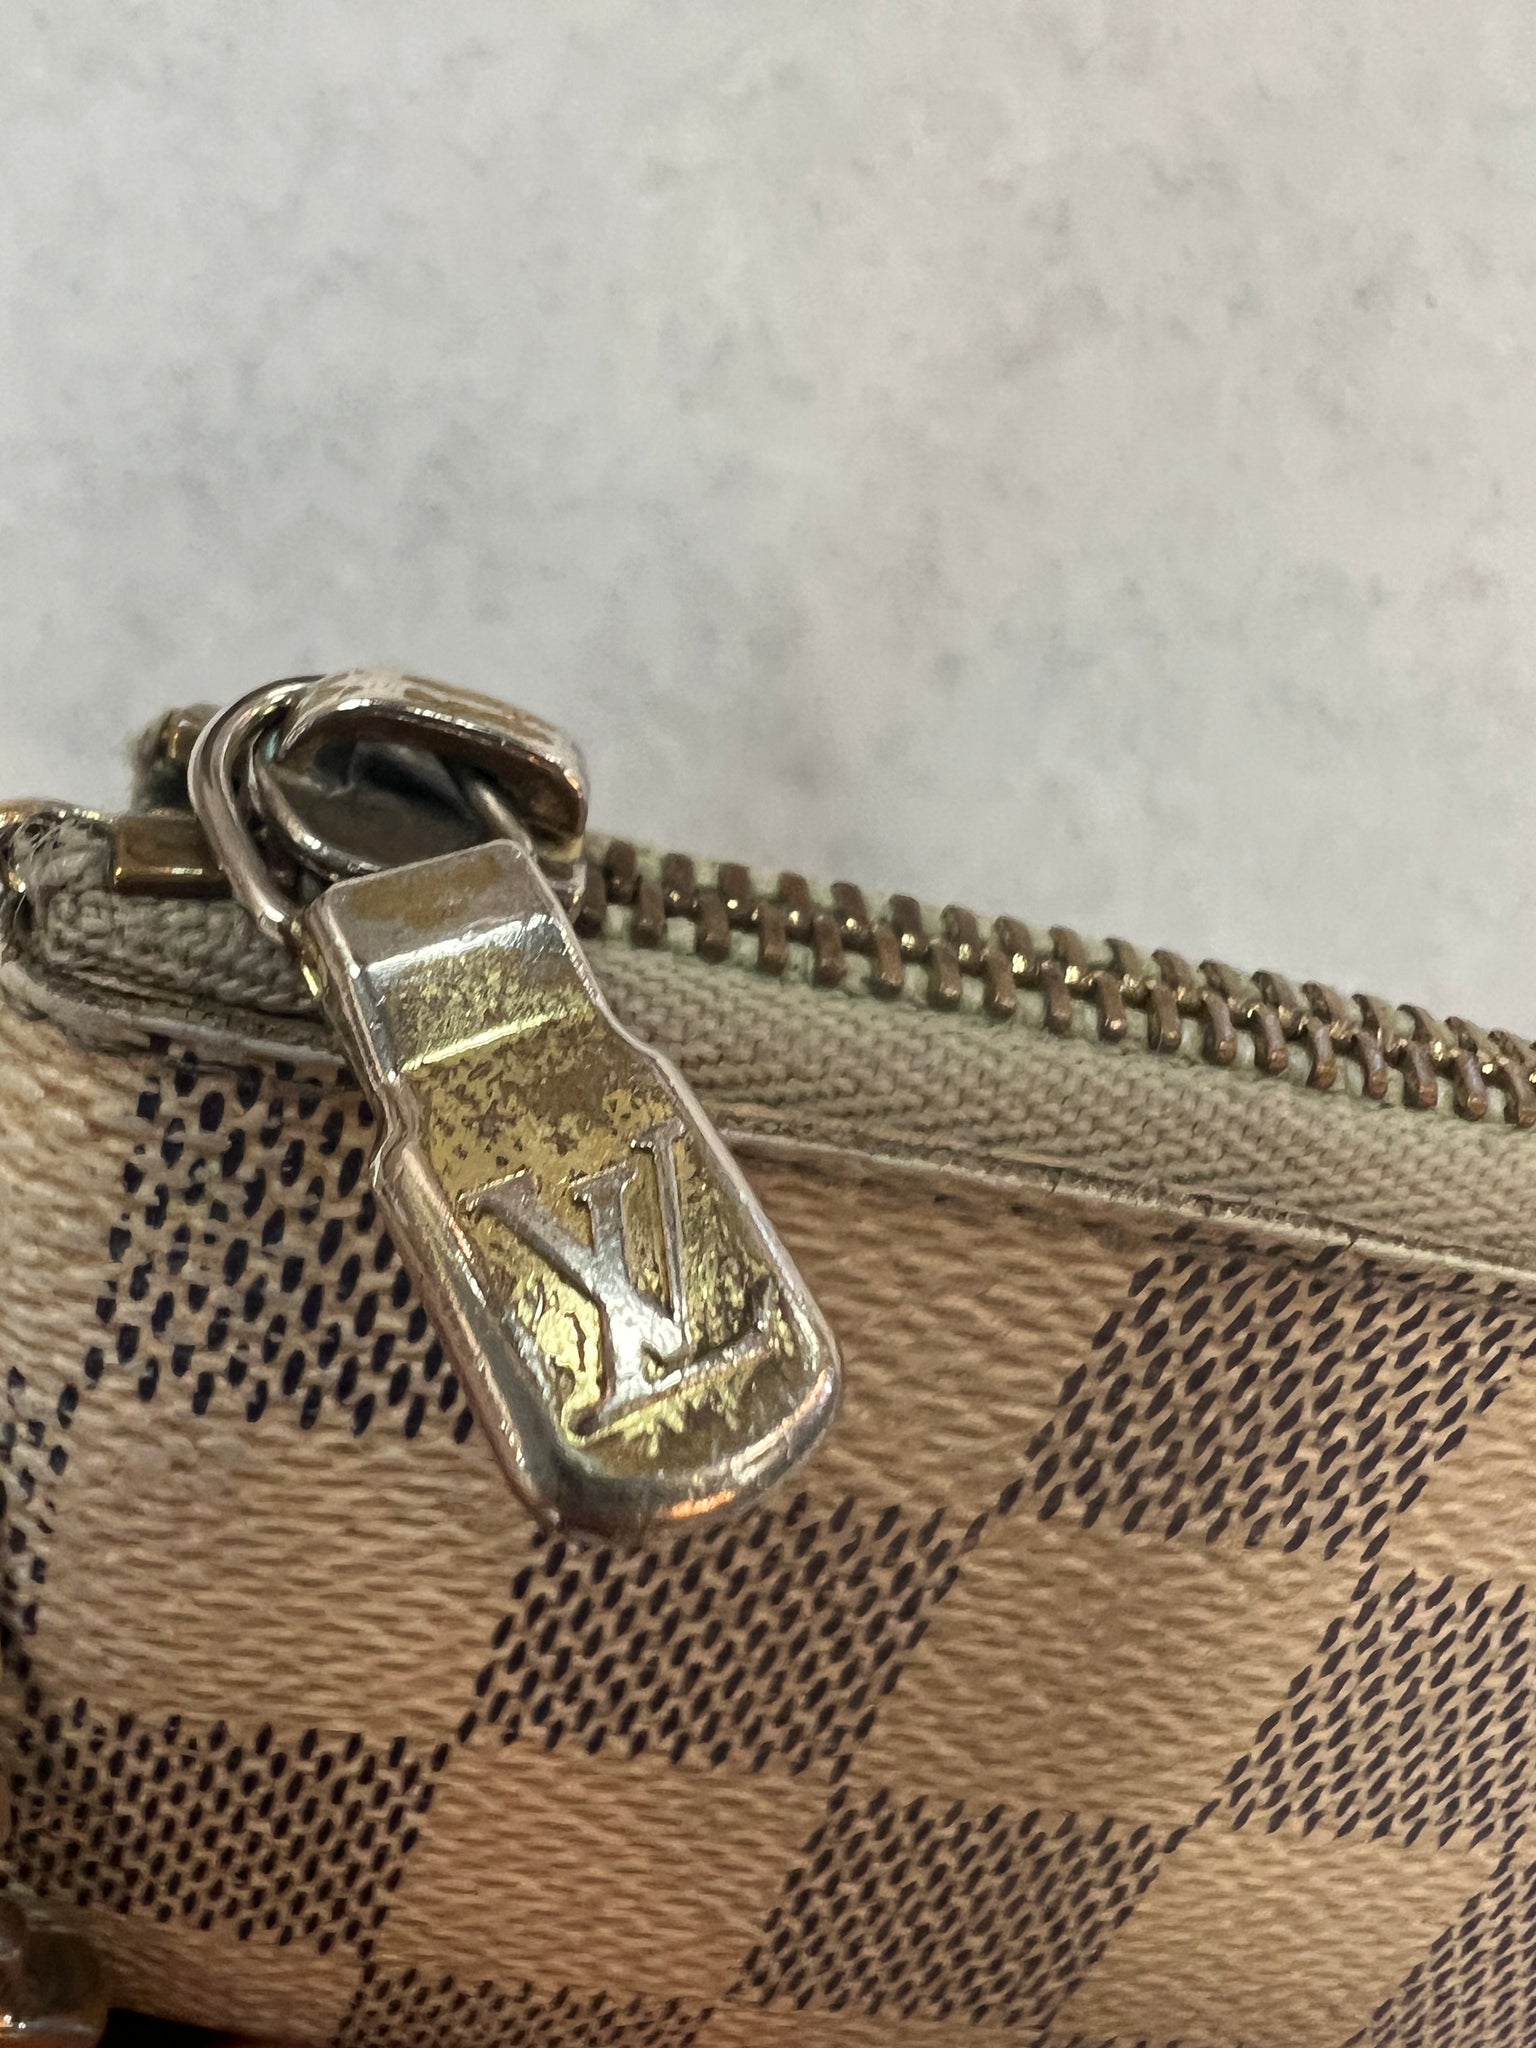 Authentic Louis Vuitton Key Pouch in Damier Azur – Relics to